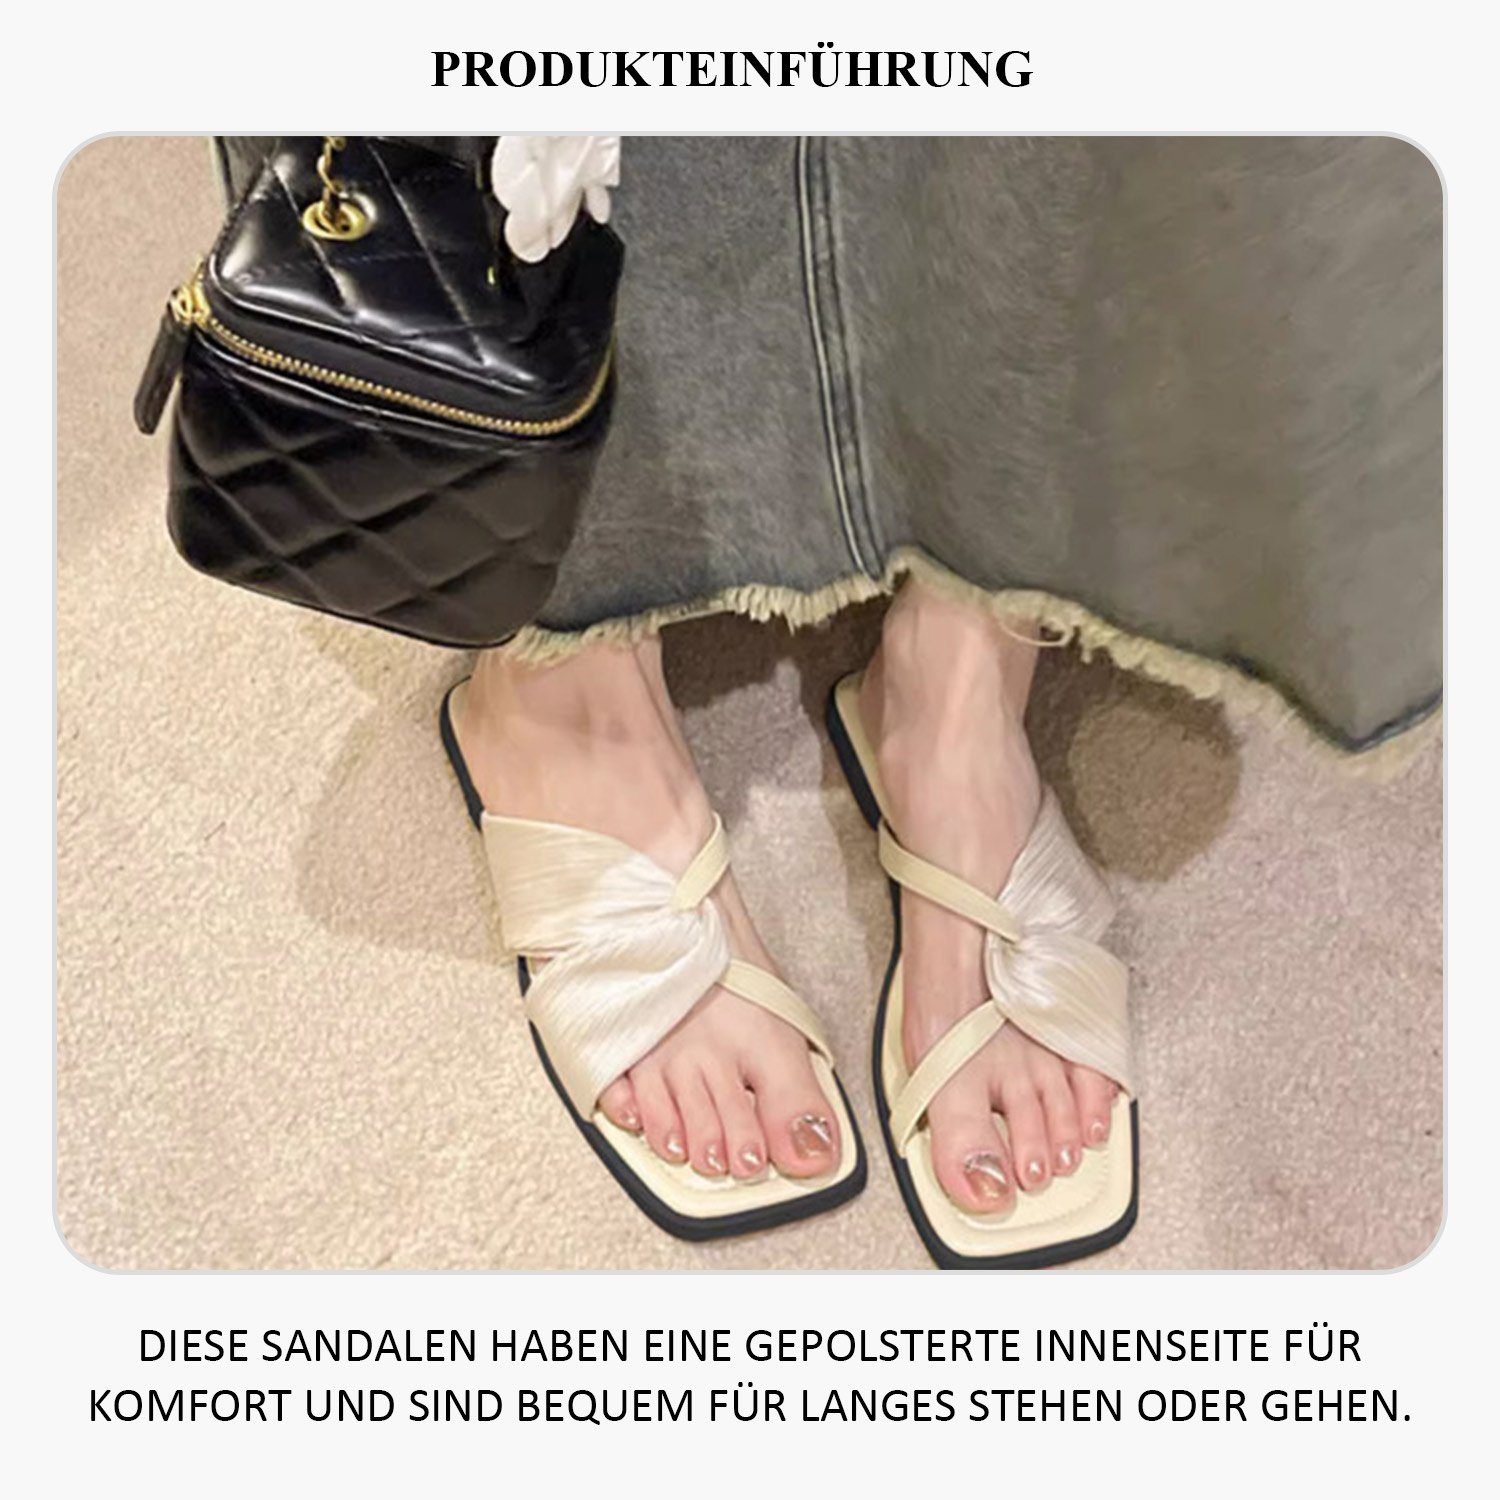 Schuhe Flach Aprikose Sandalen Bohemia Damen Freizeit Sandale Sommer Daisred Bequem Sandalen